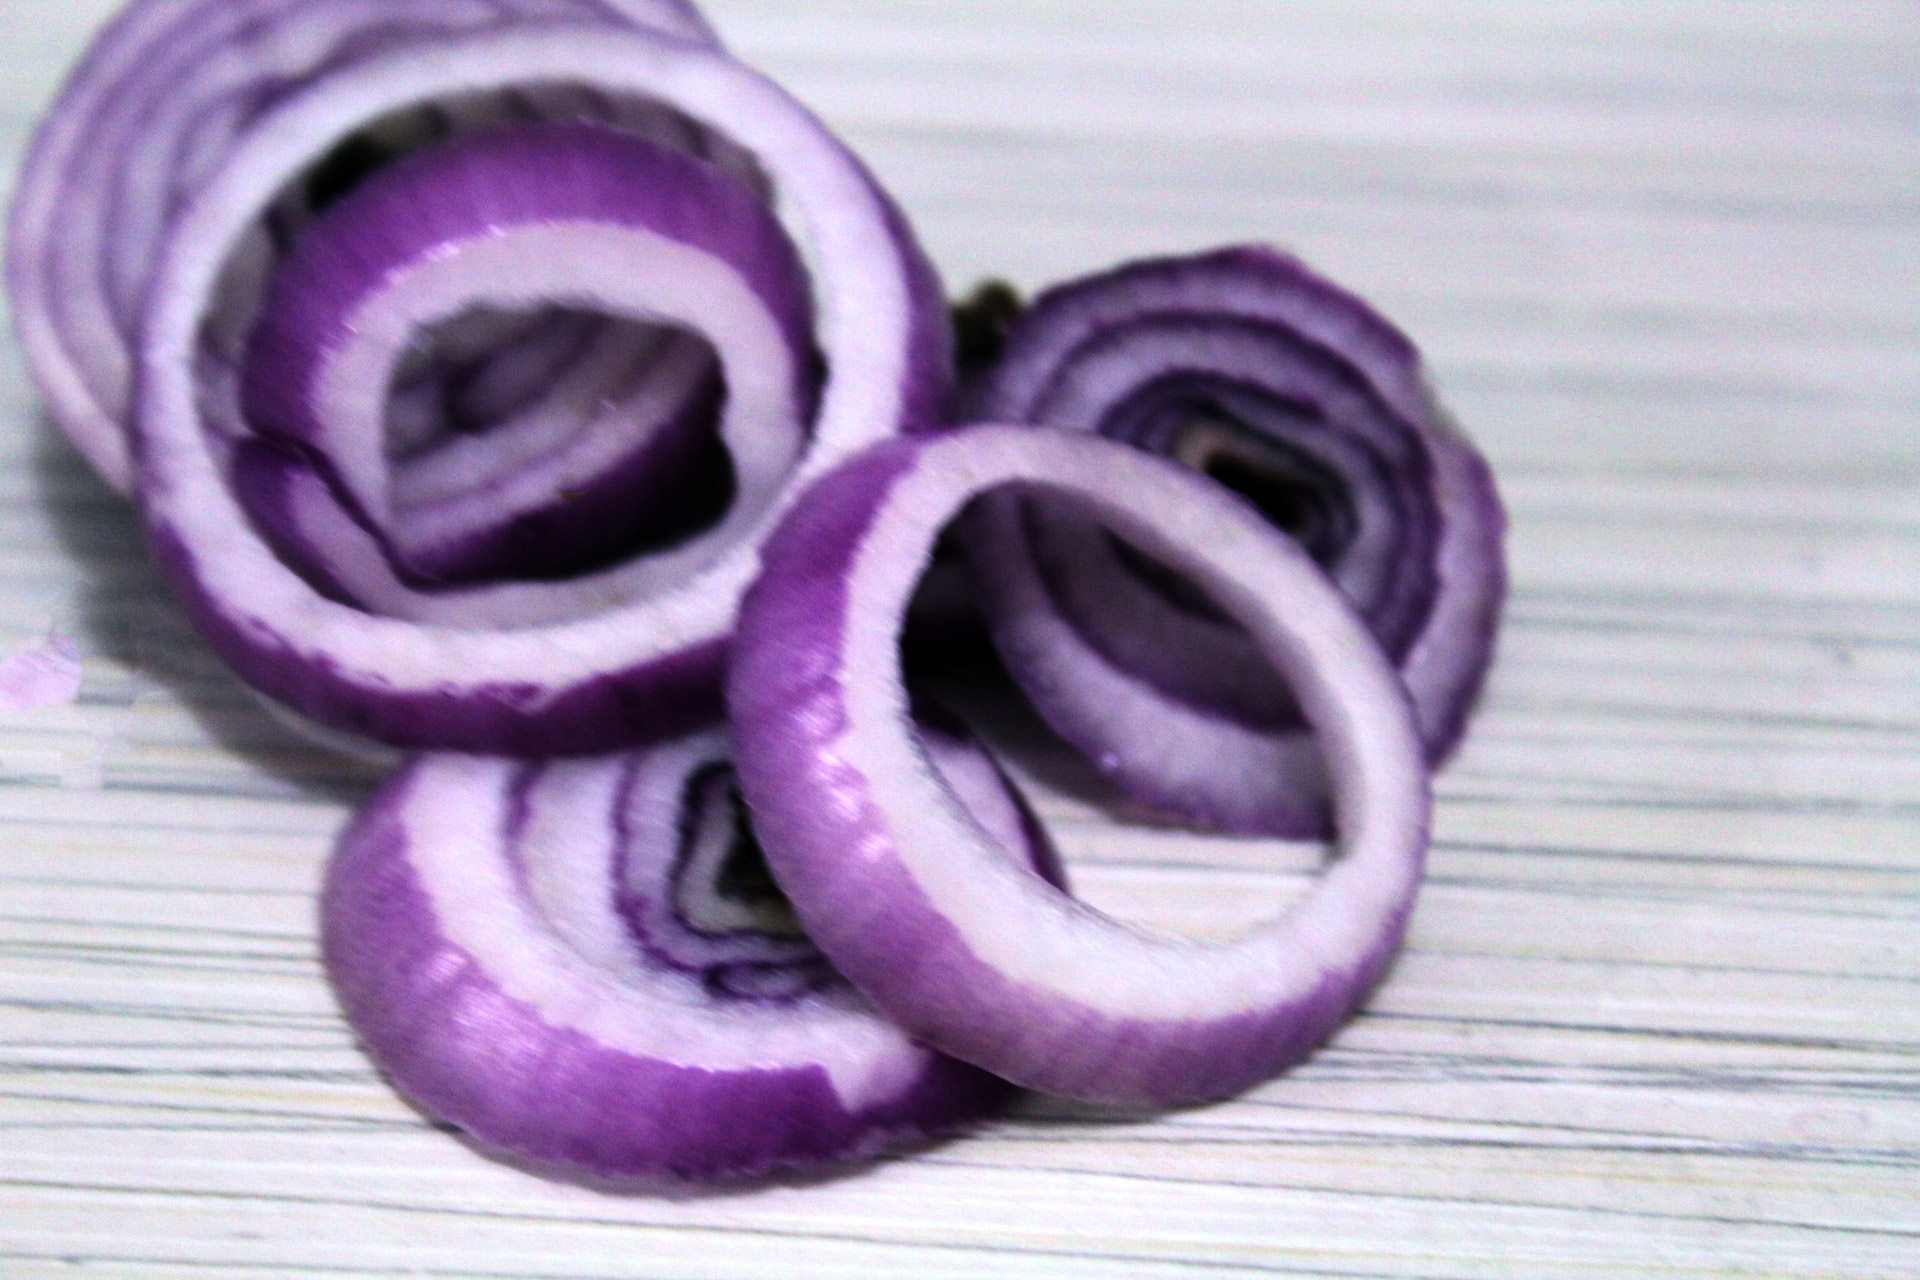 Southwestern Onion Rings